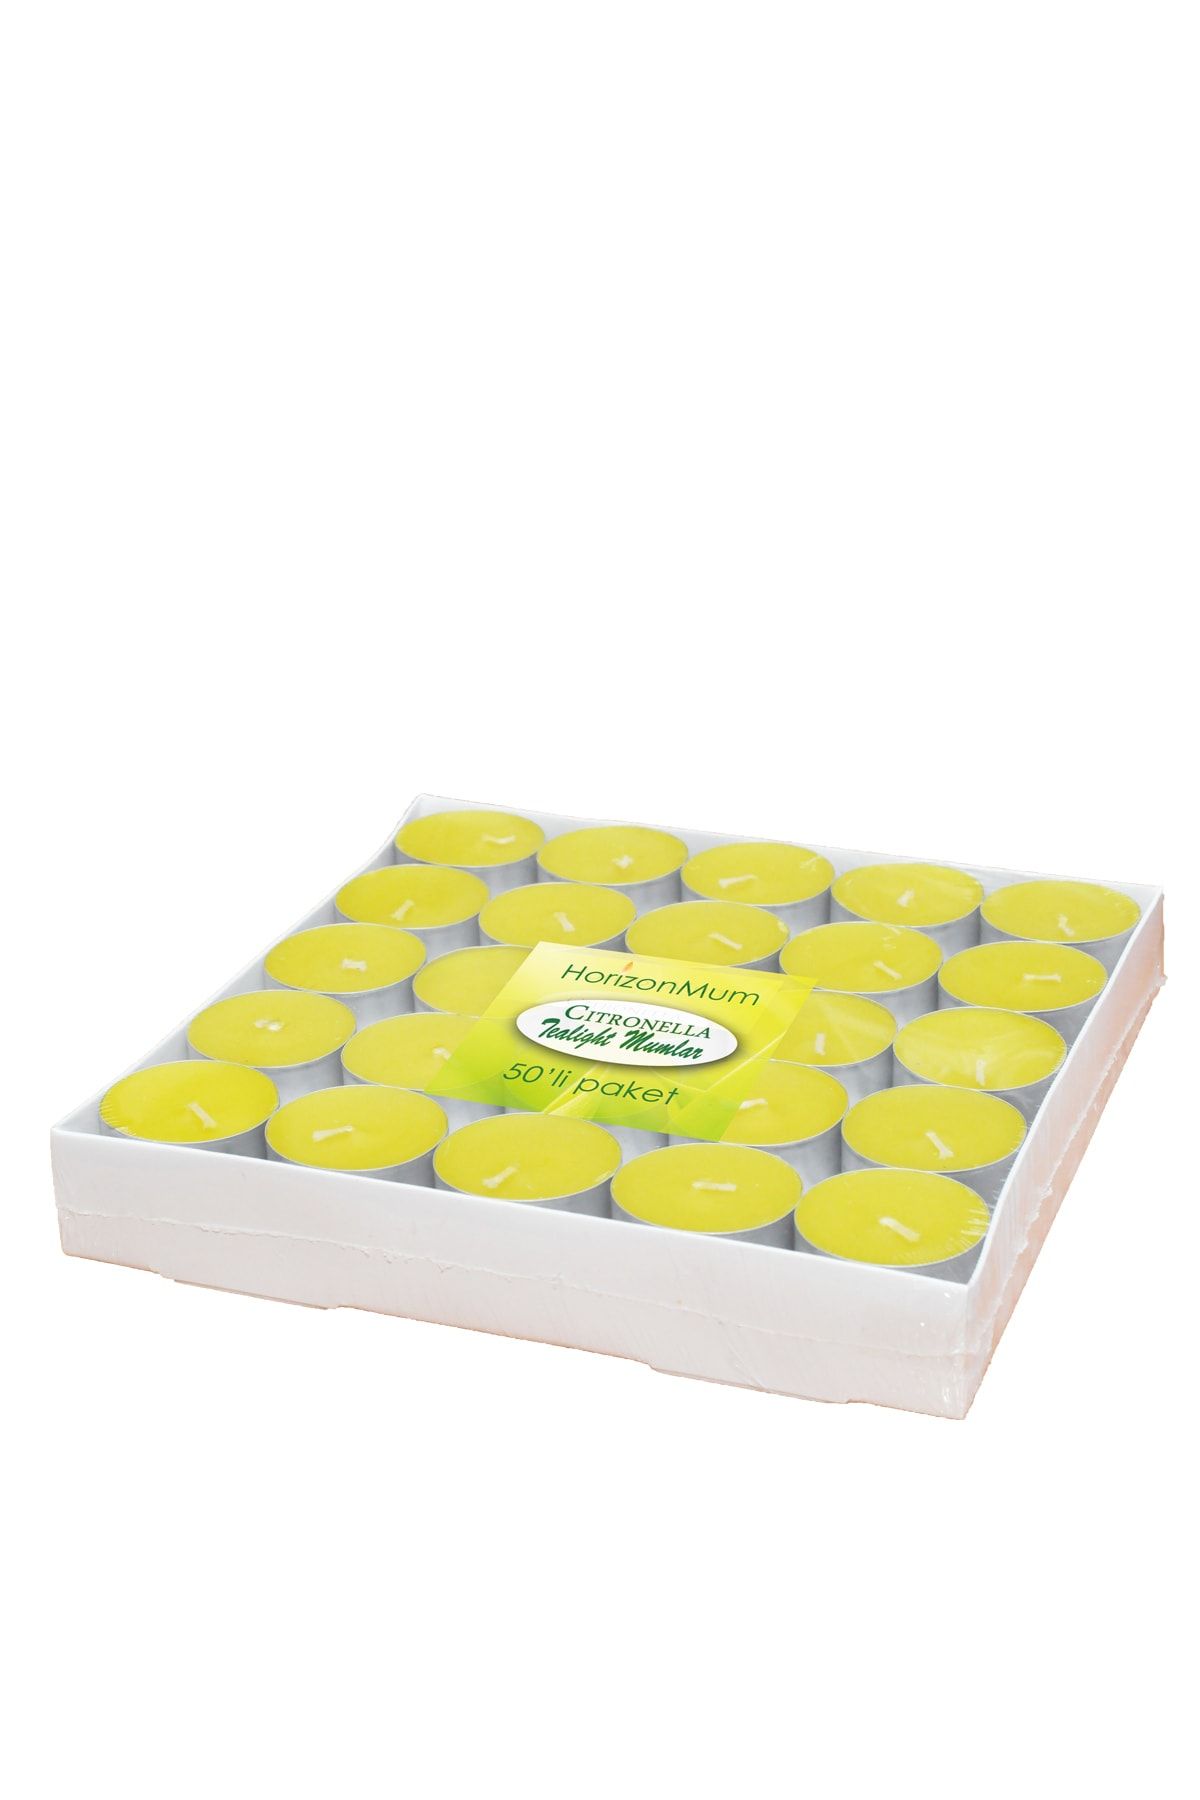 Horizon Mum Citronella 50'li Limon Çiçeği Kokulu Tealight Mum